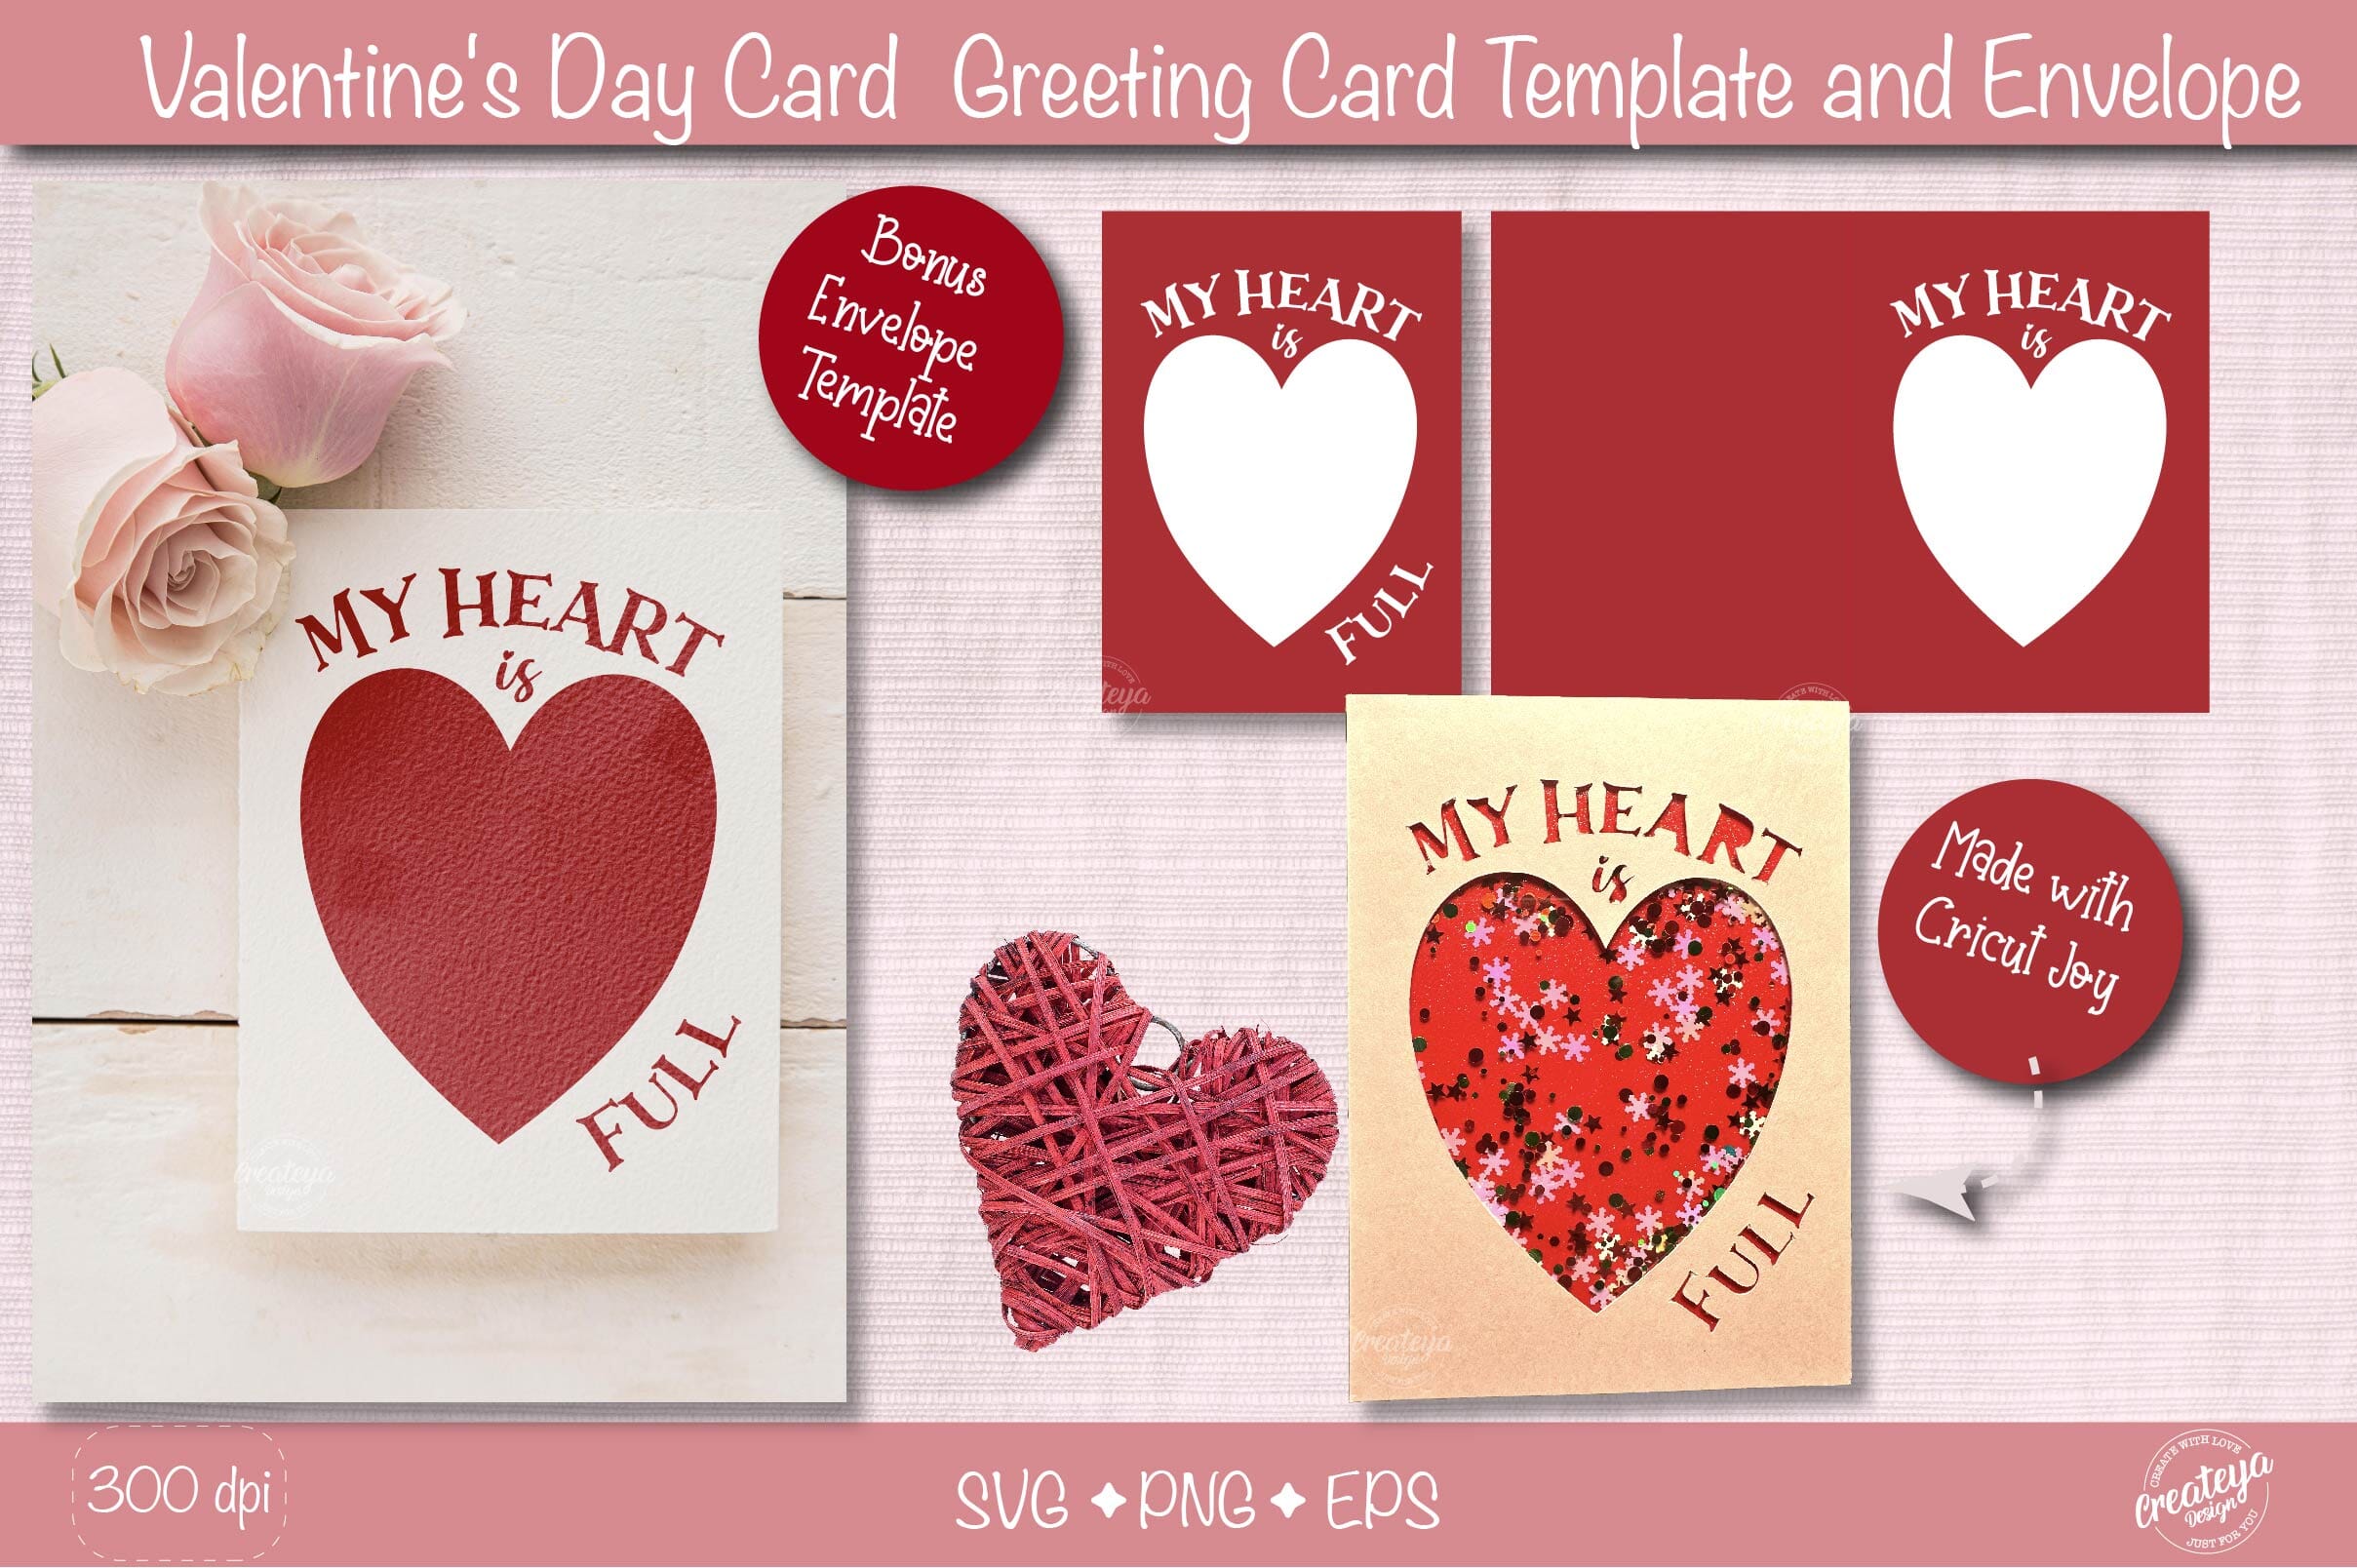 LOVING HEART CARDS